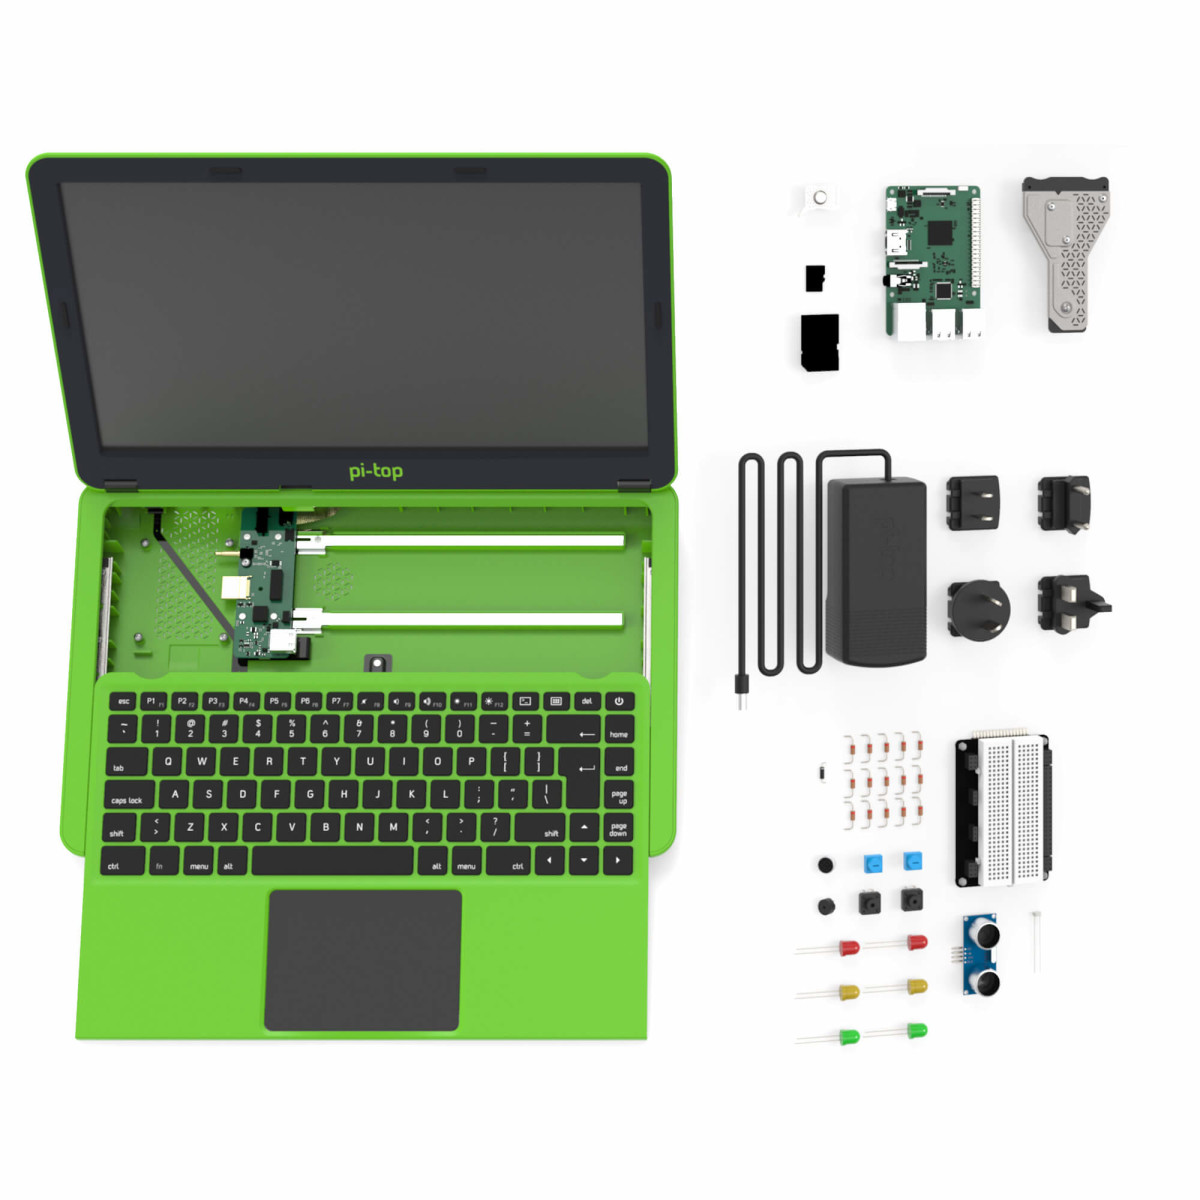 collegegeld Kapel wervelkolom Pi-Top V2 - Raspberry Pi Laptop, Second Edition | Samm Technology